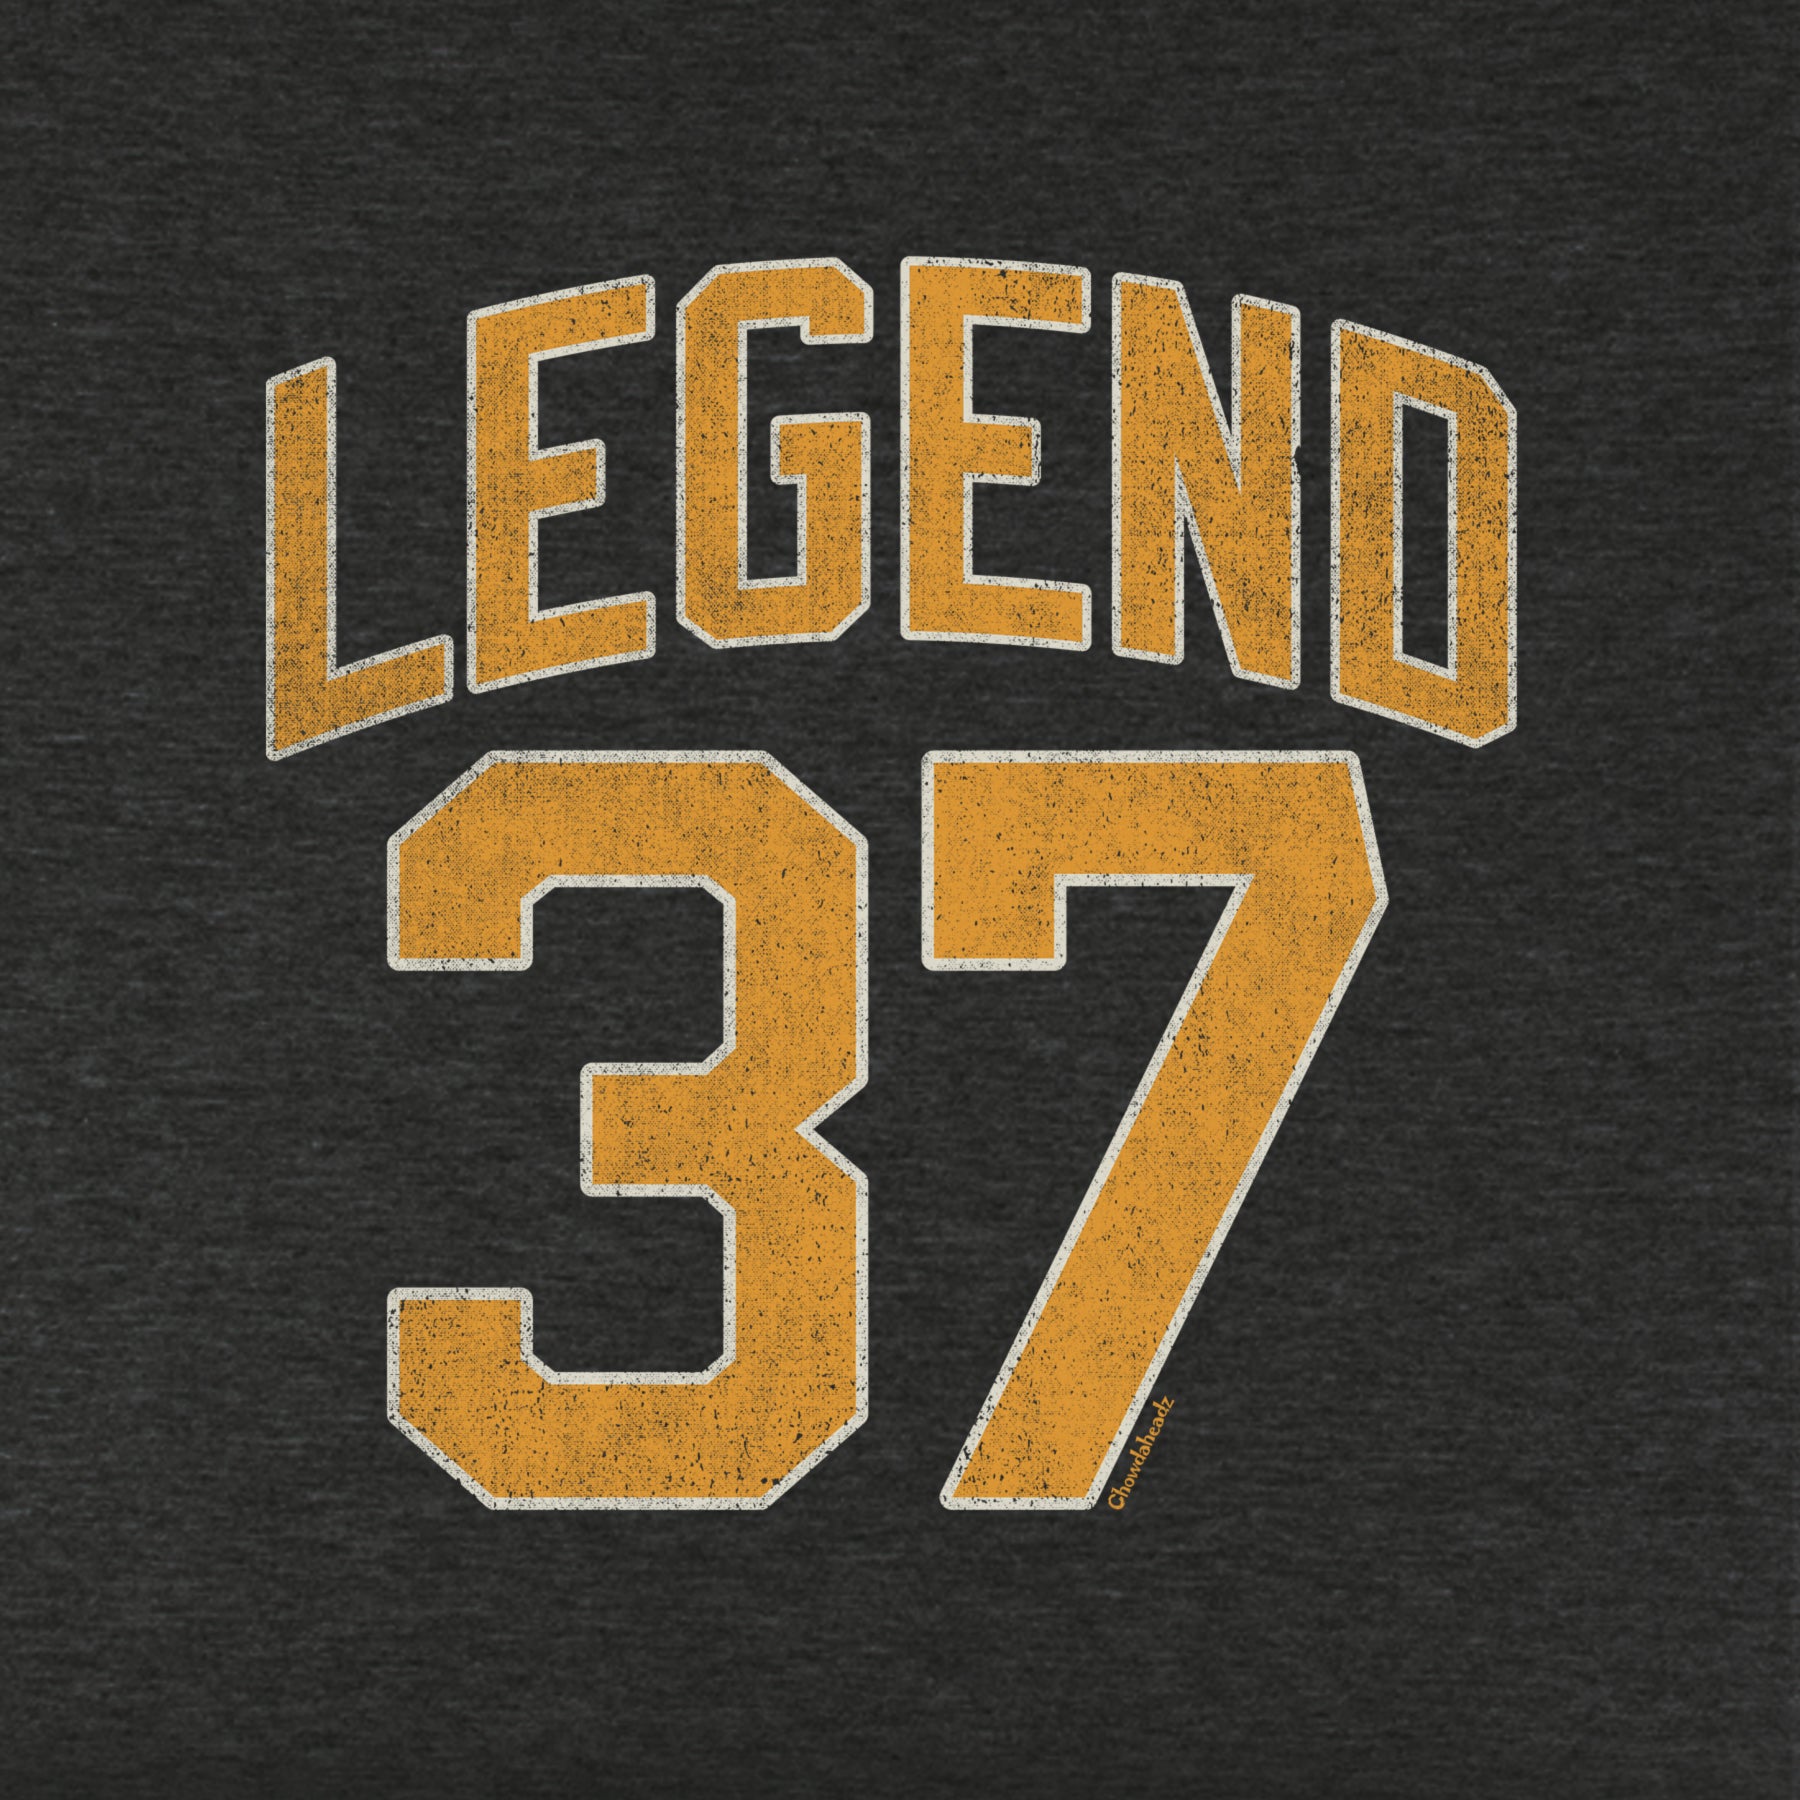 Legend 37 Alter Ego Youth T-shirt - Chowdaheadz